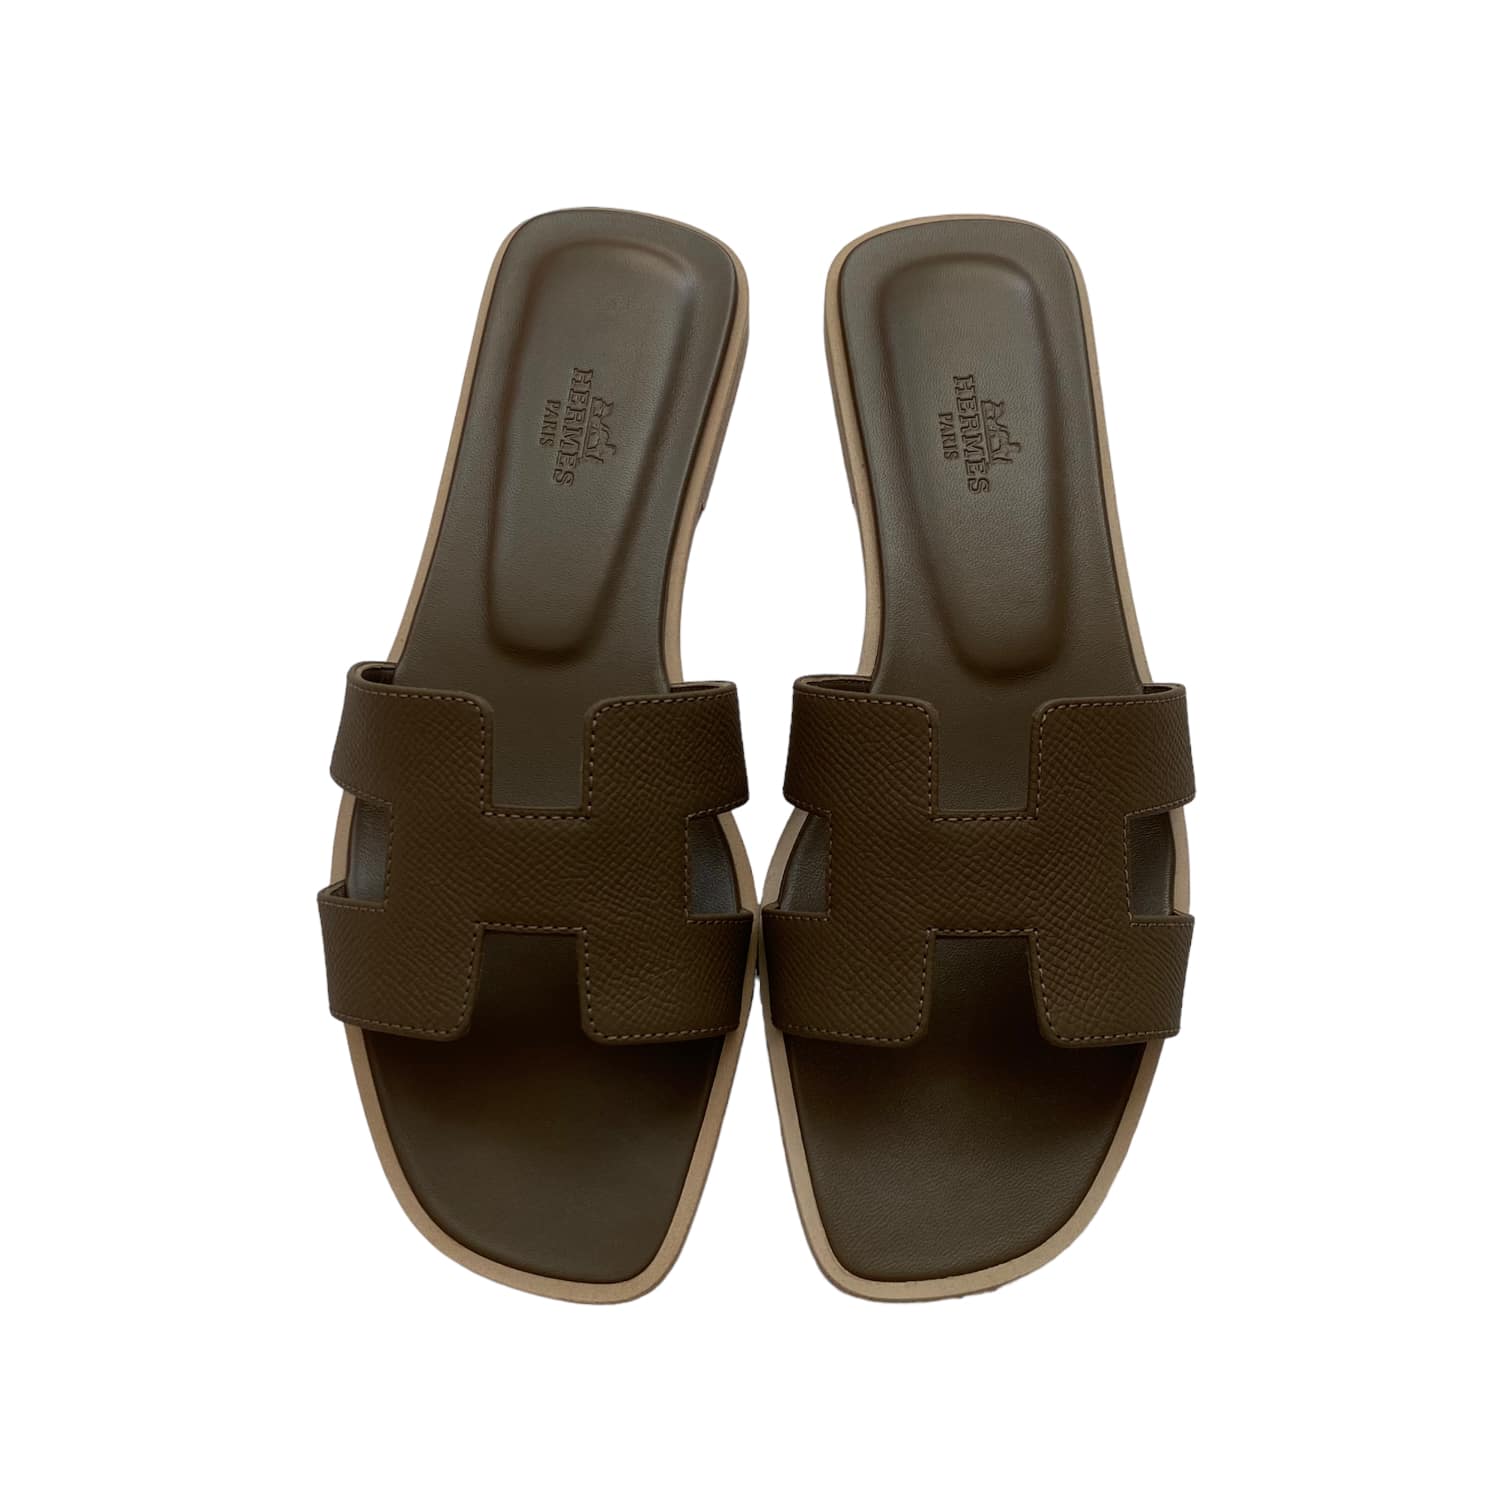 Hermes Oran sandal etoupe size 38 EU - The Luxury Flavor